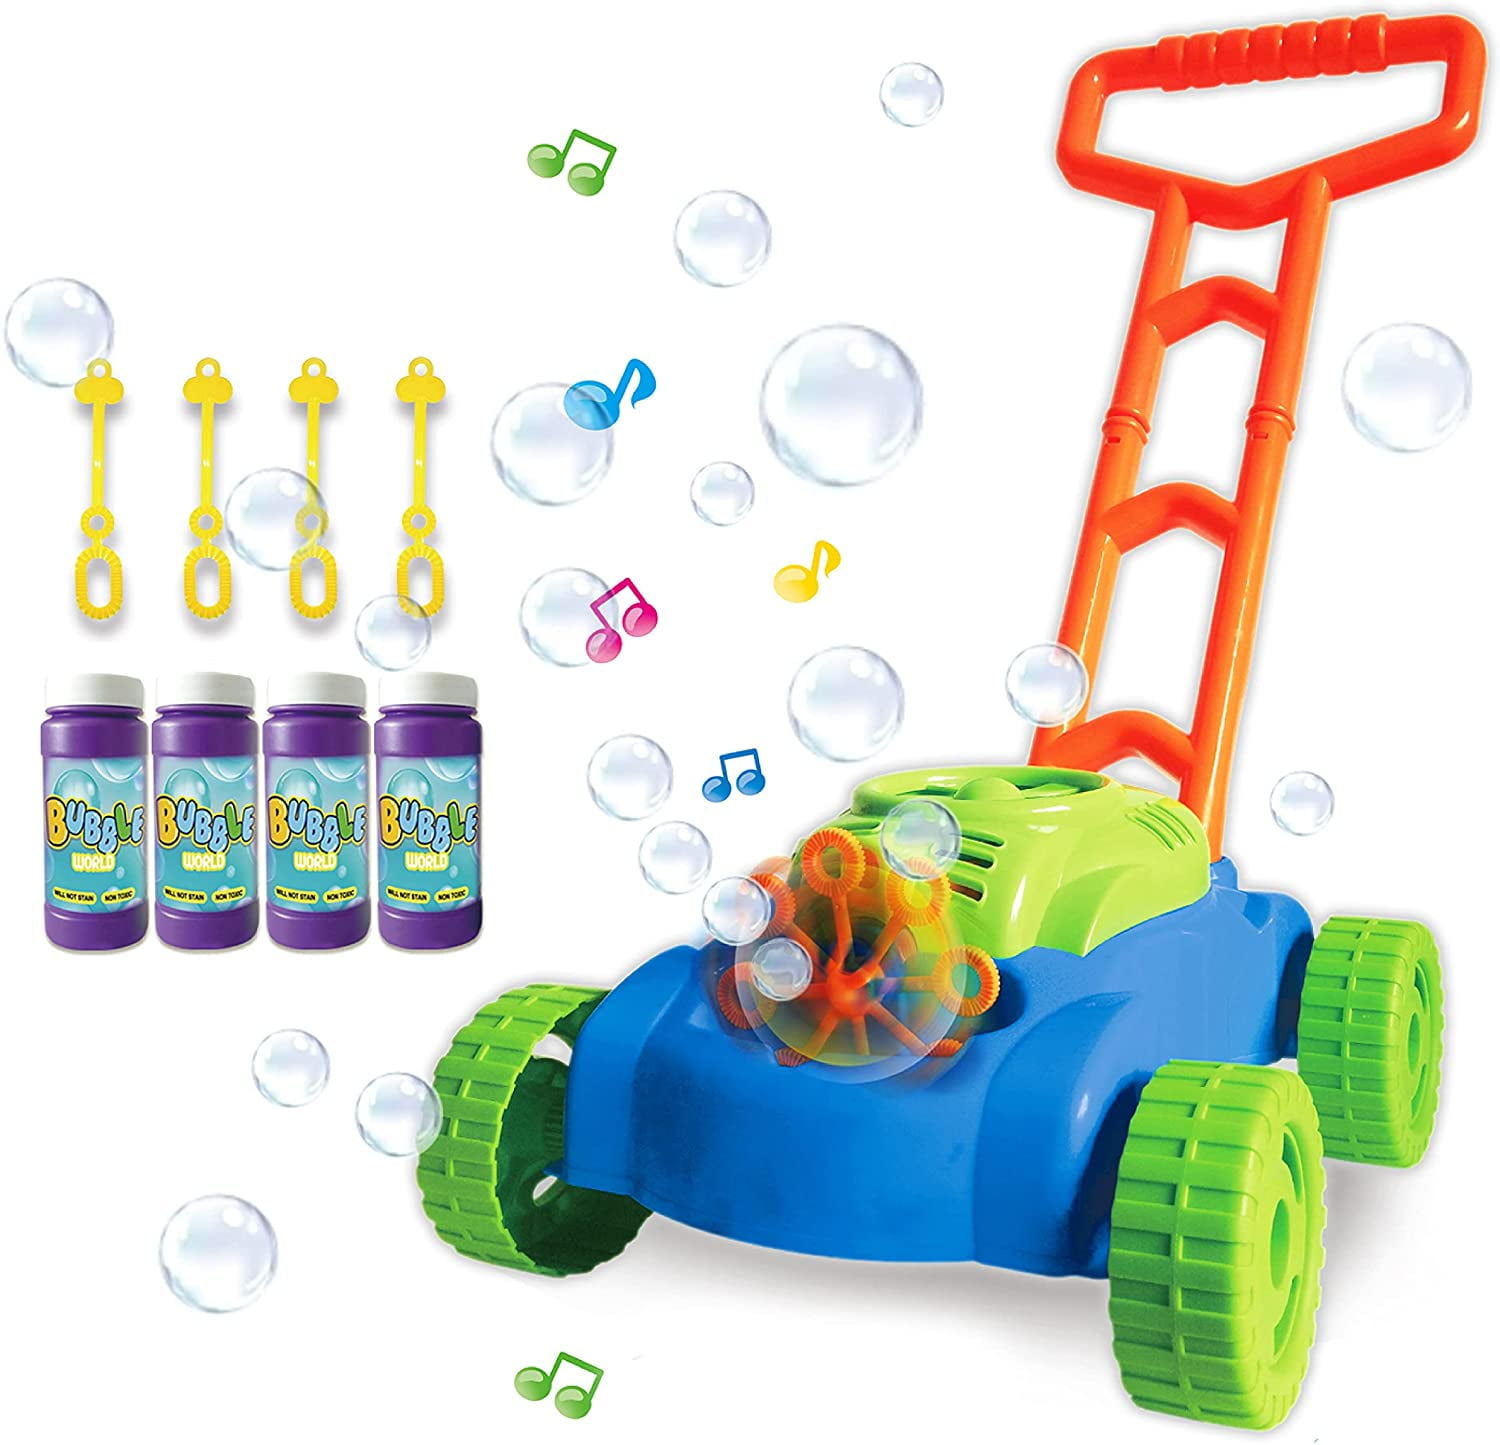 Kids Lawn Bubble Mower Bubbles Machine Blower Garden Party Summer Fun Toy Gift 